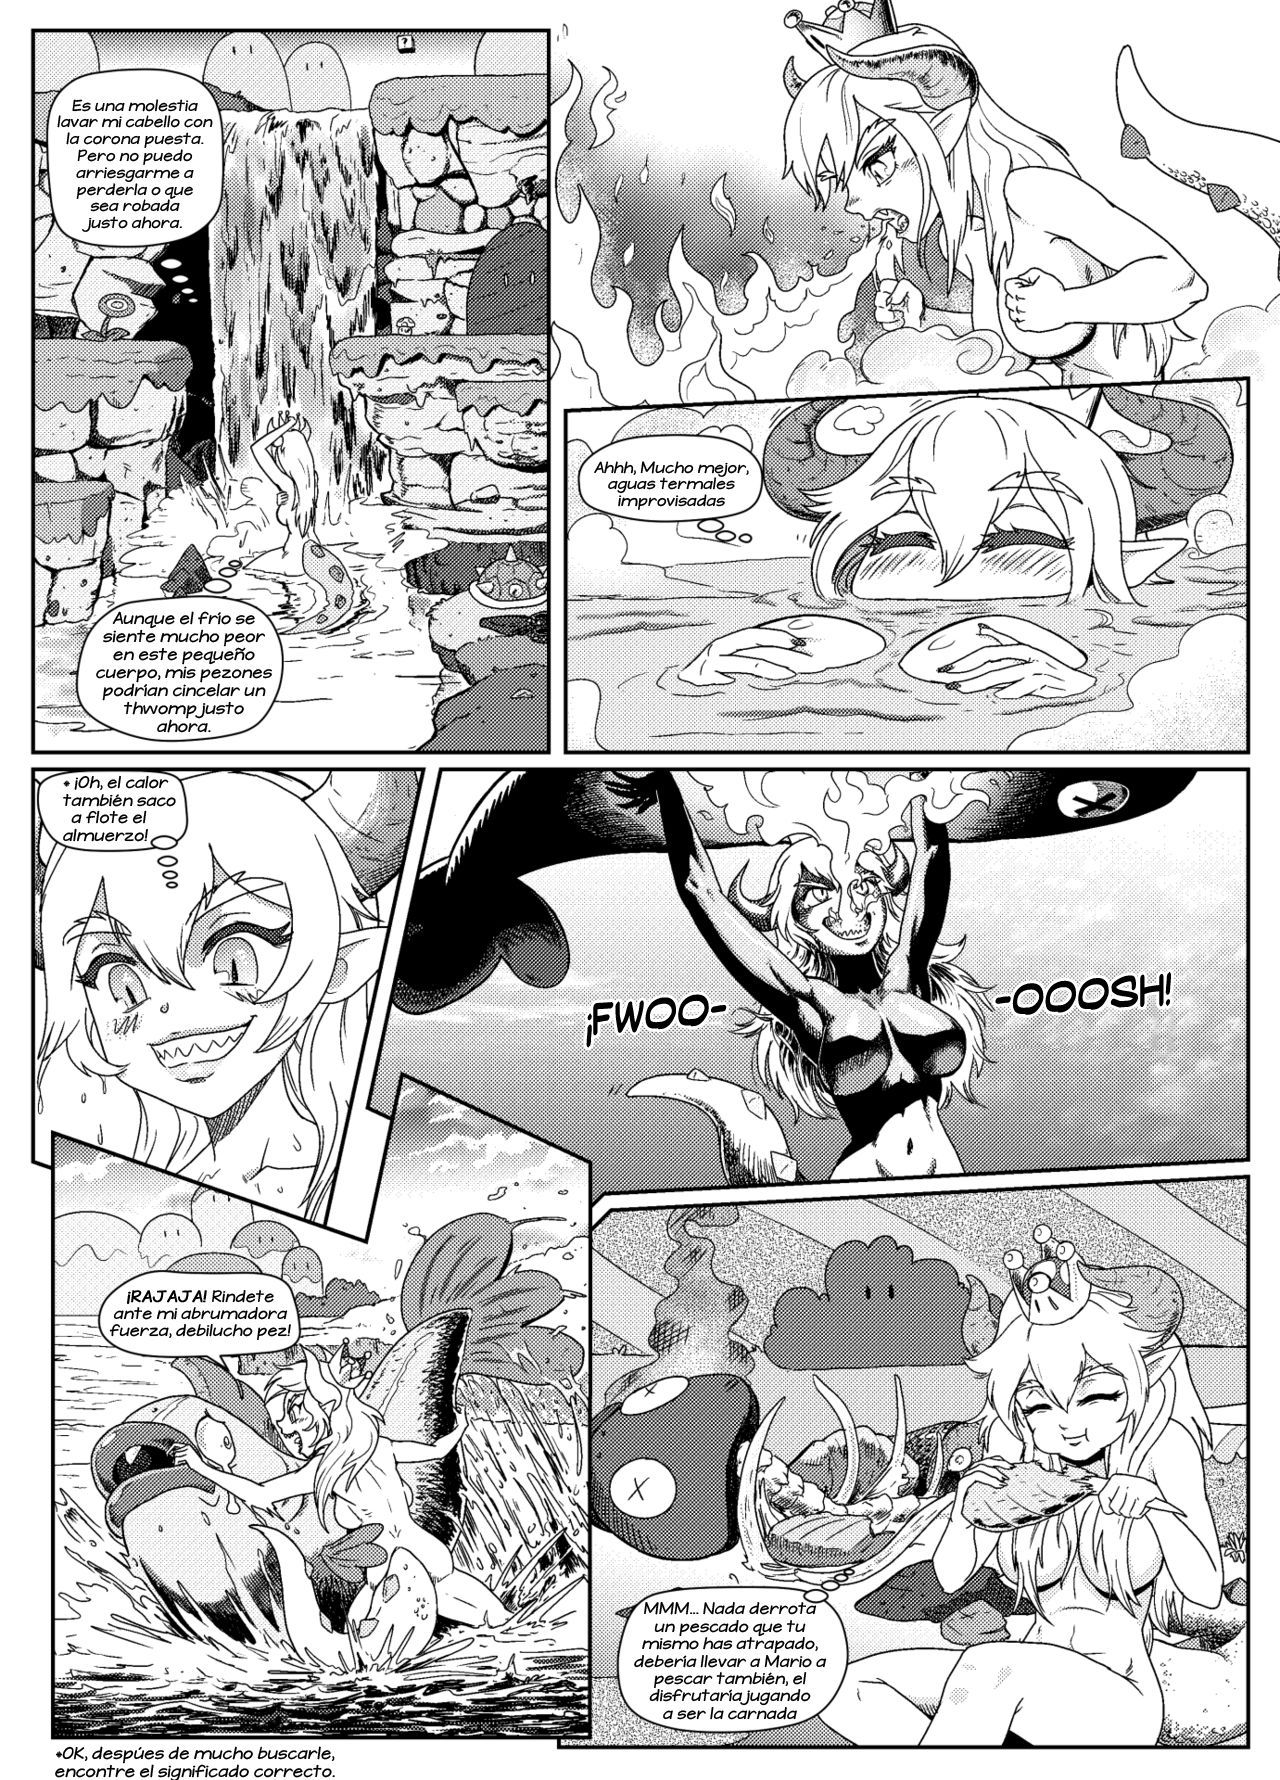 [Pencils] Bowsette comic (Mario Bros.) [Spanish] by Arkoniusx 9